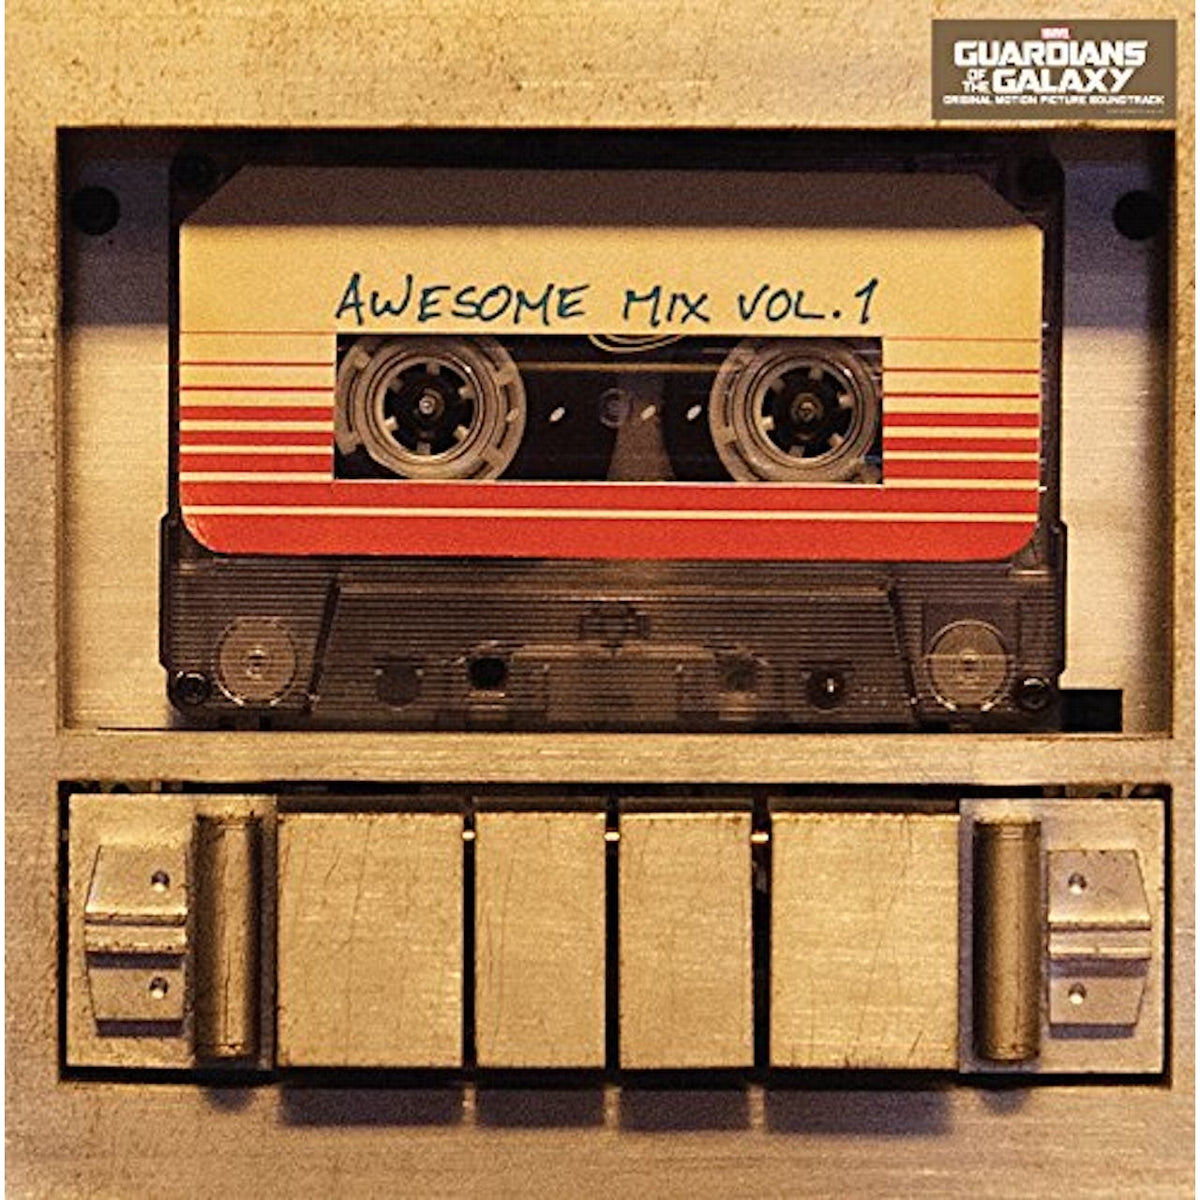 V/A - Guardians of the Galaxy Awesome Mix Vol. 1 Original Soundtrack LP